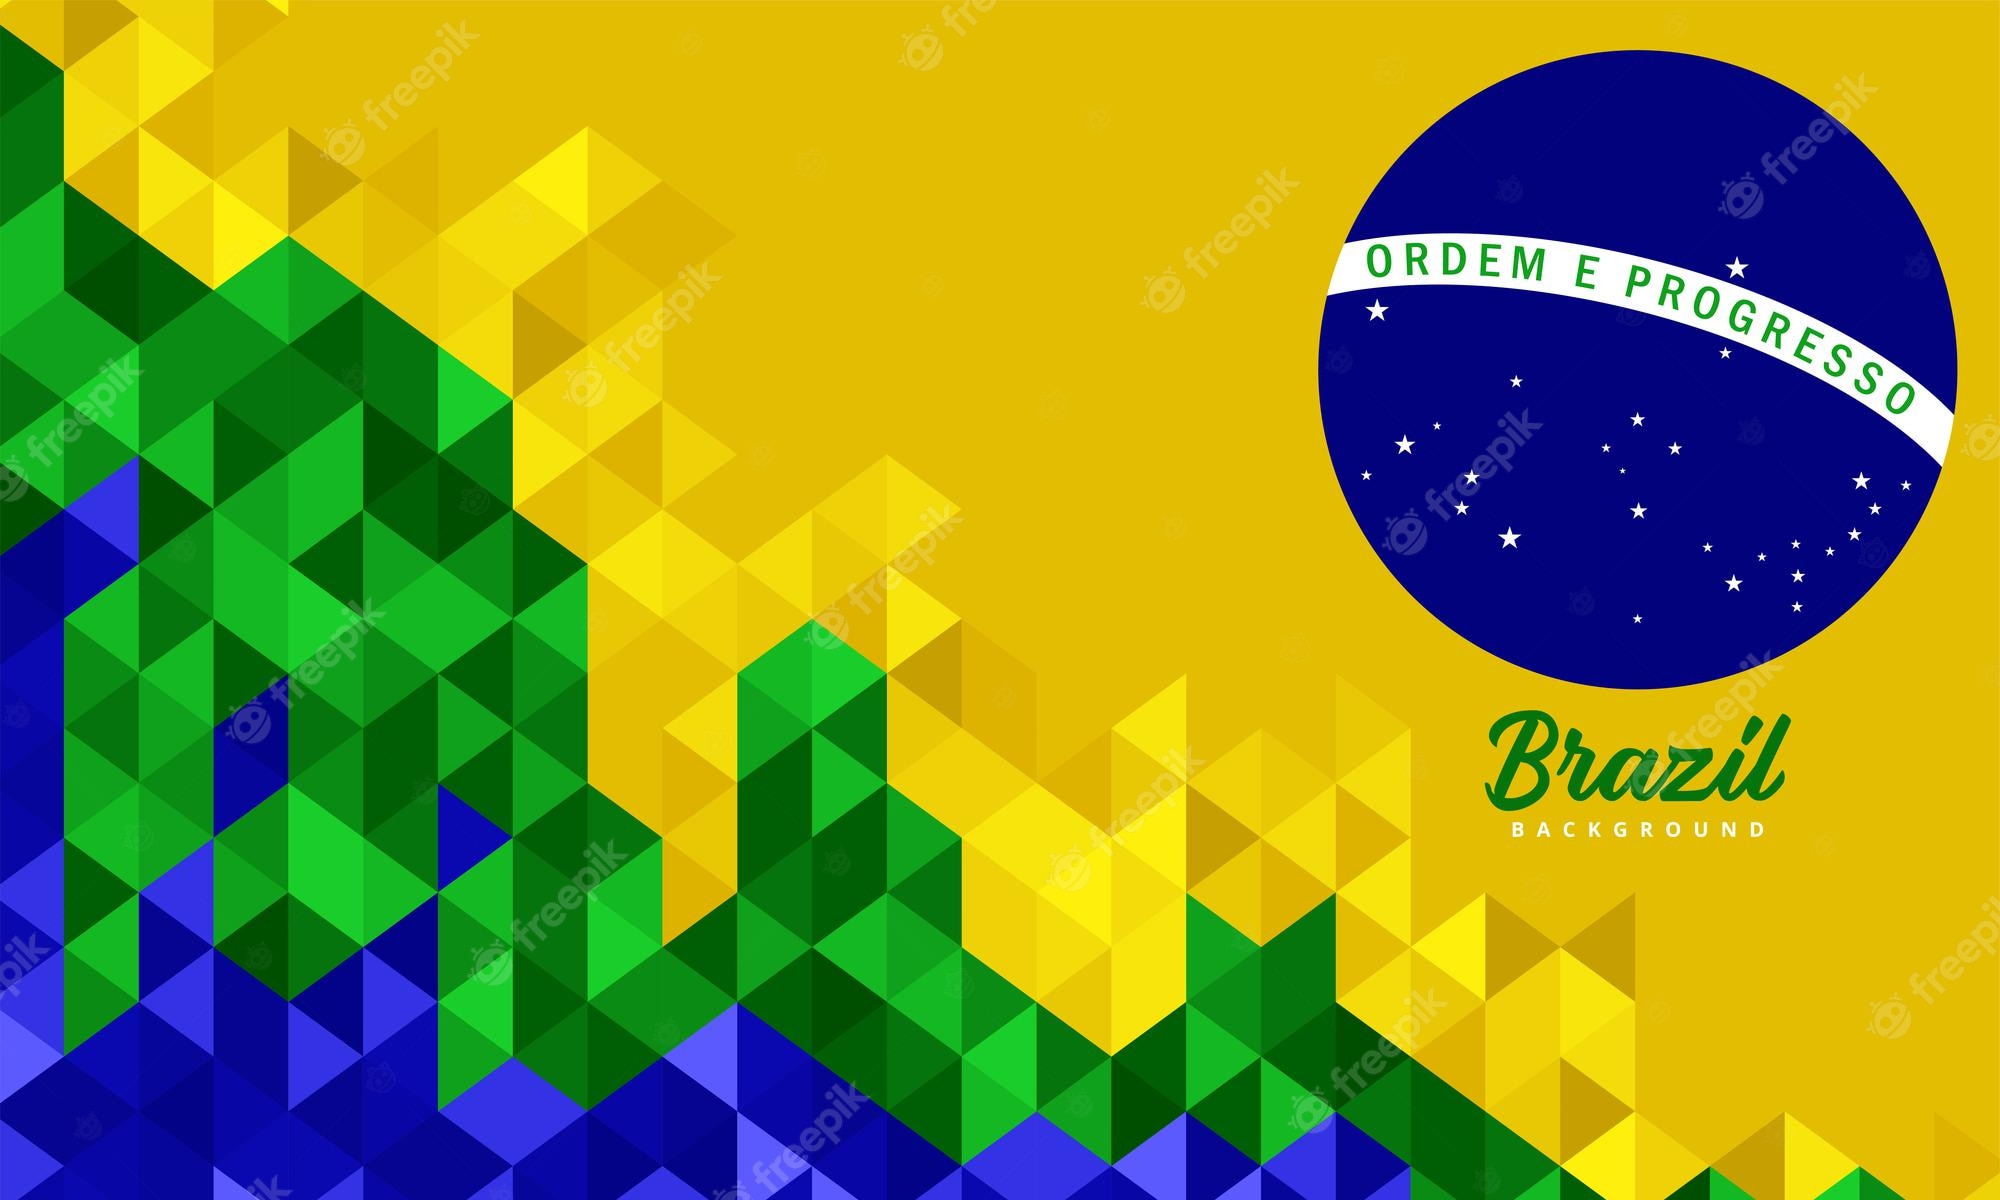 Brazil Wallpapers